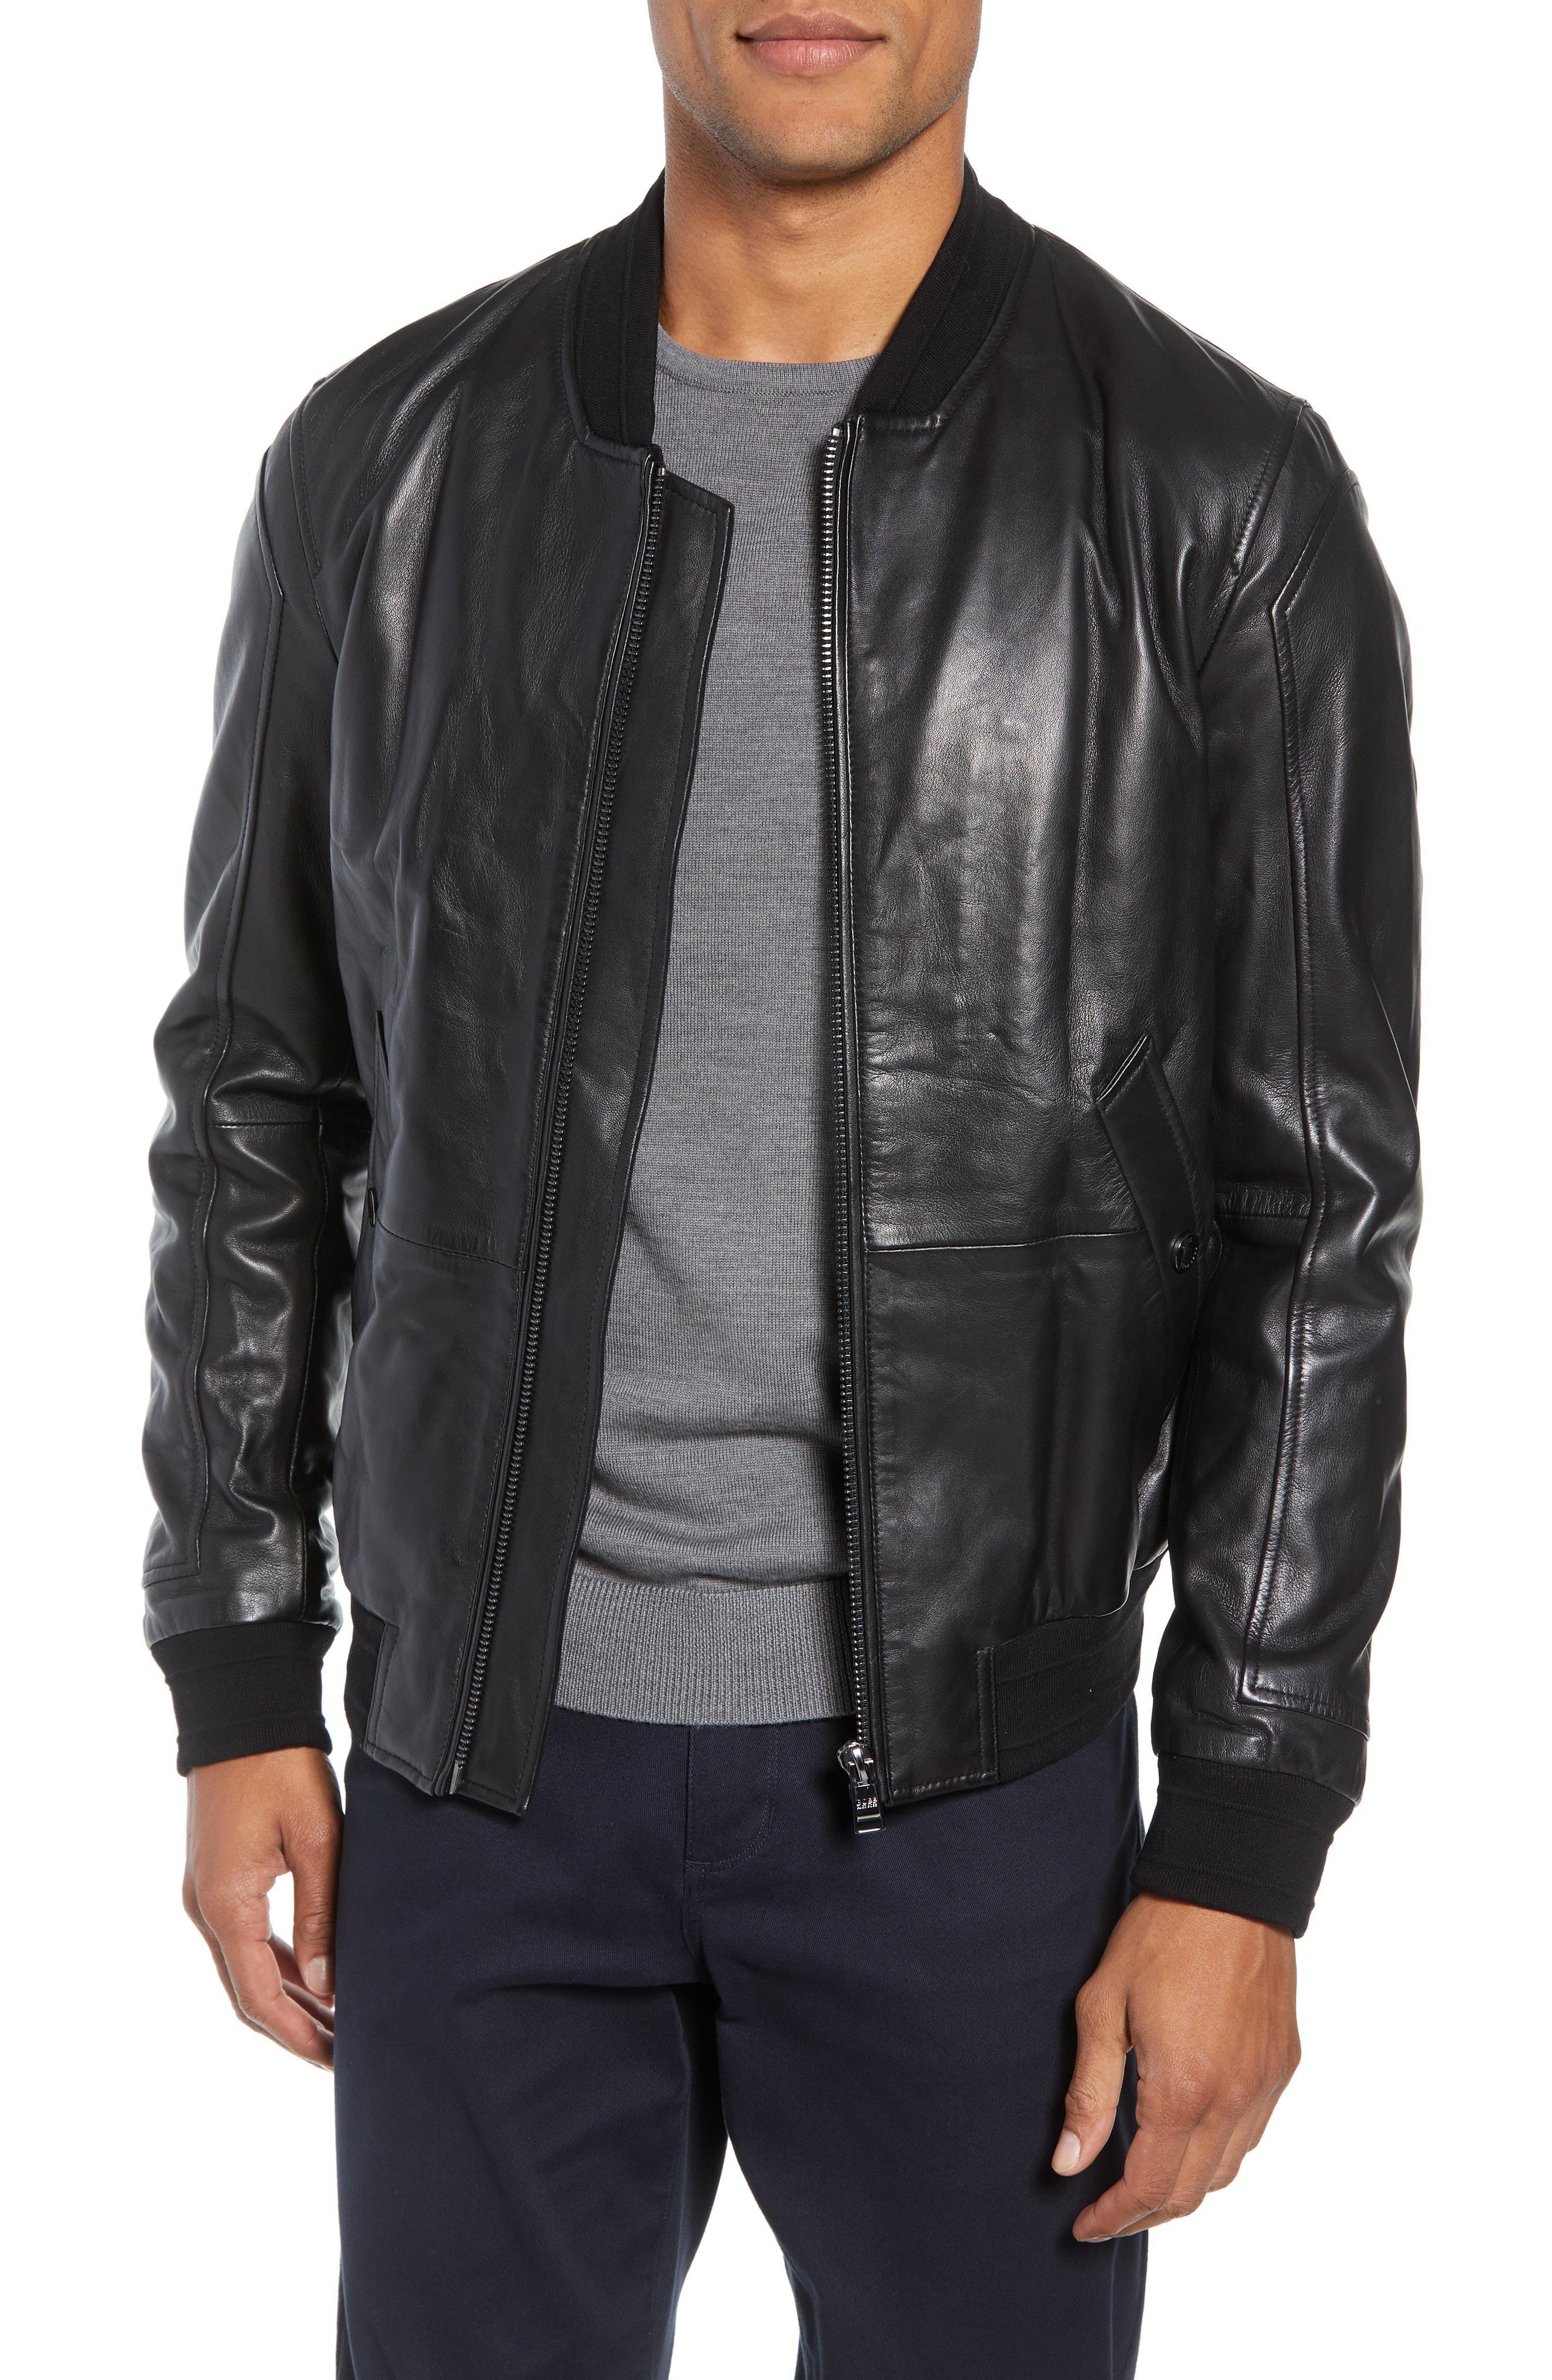 BOSS Arinos Leather Bomber Jacket in Black for Men - Lyst